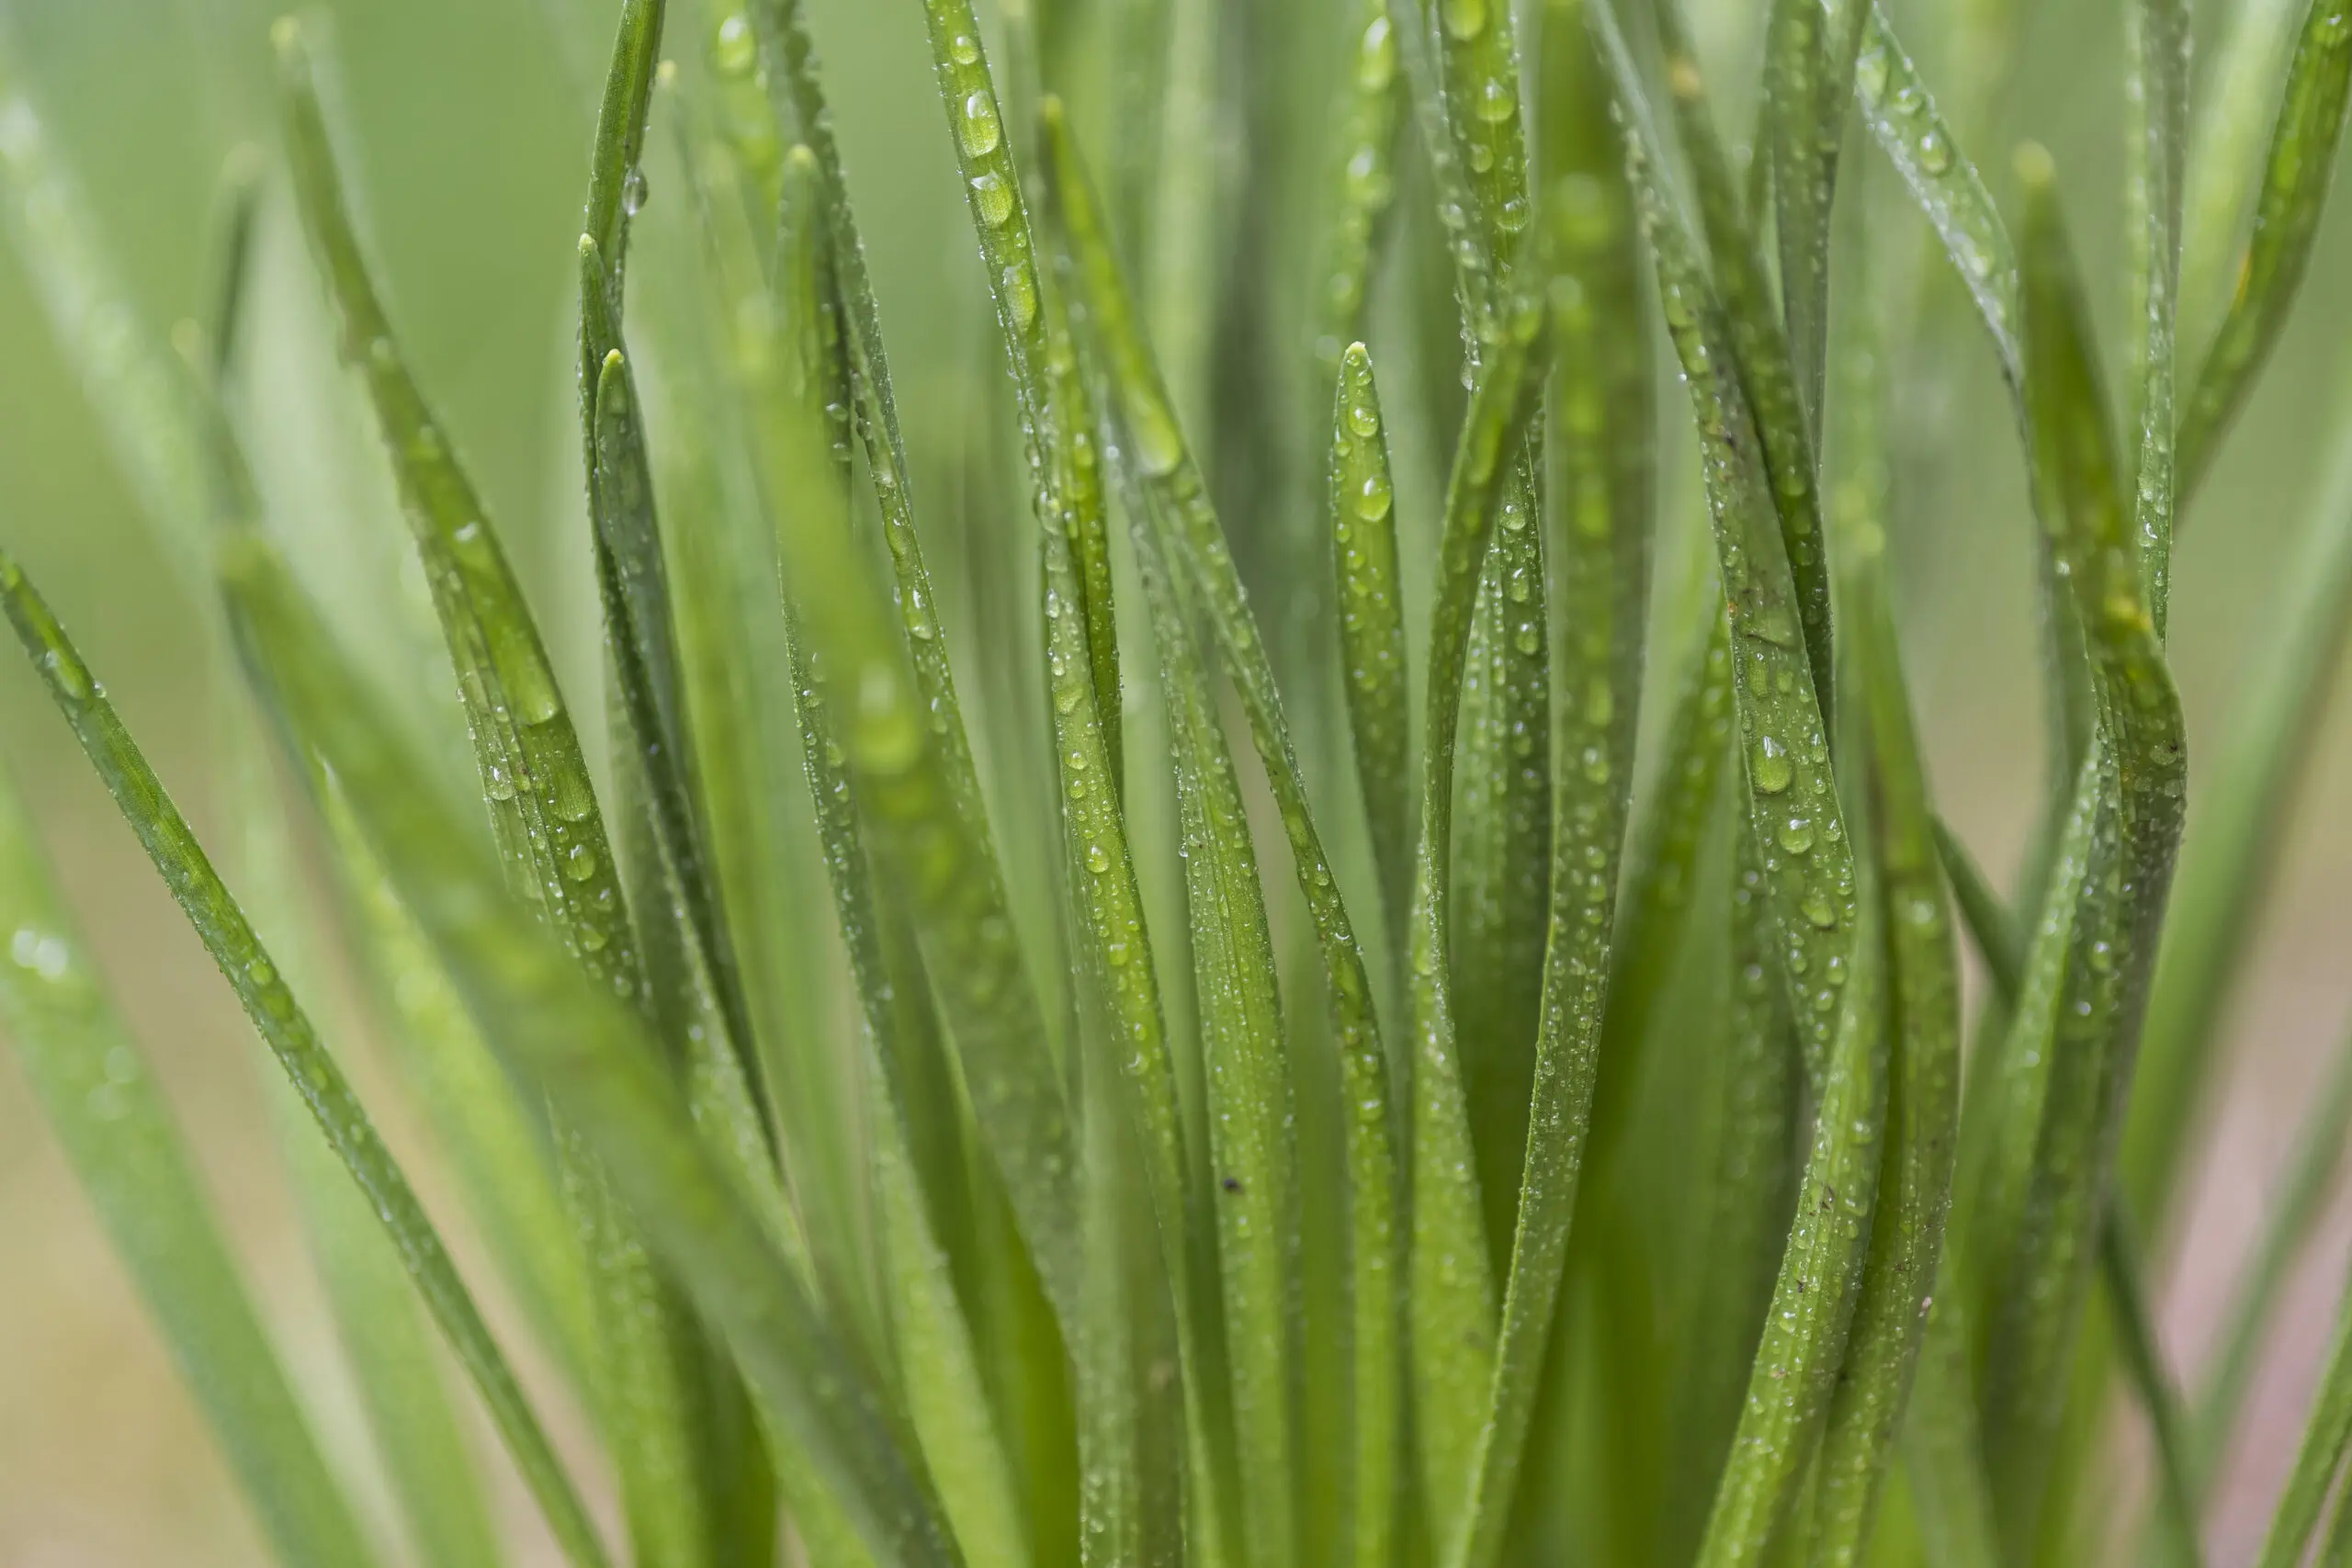 Wandbild (3824) Green drops präsentiert: Details und Strukturen,Natur,Pflanzen